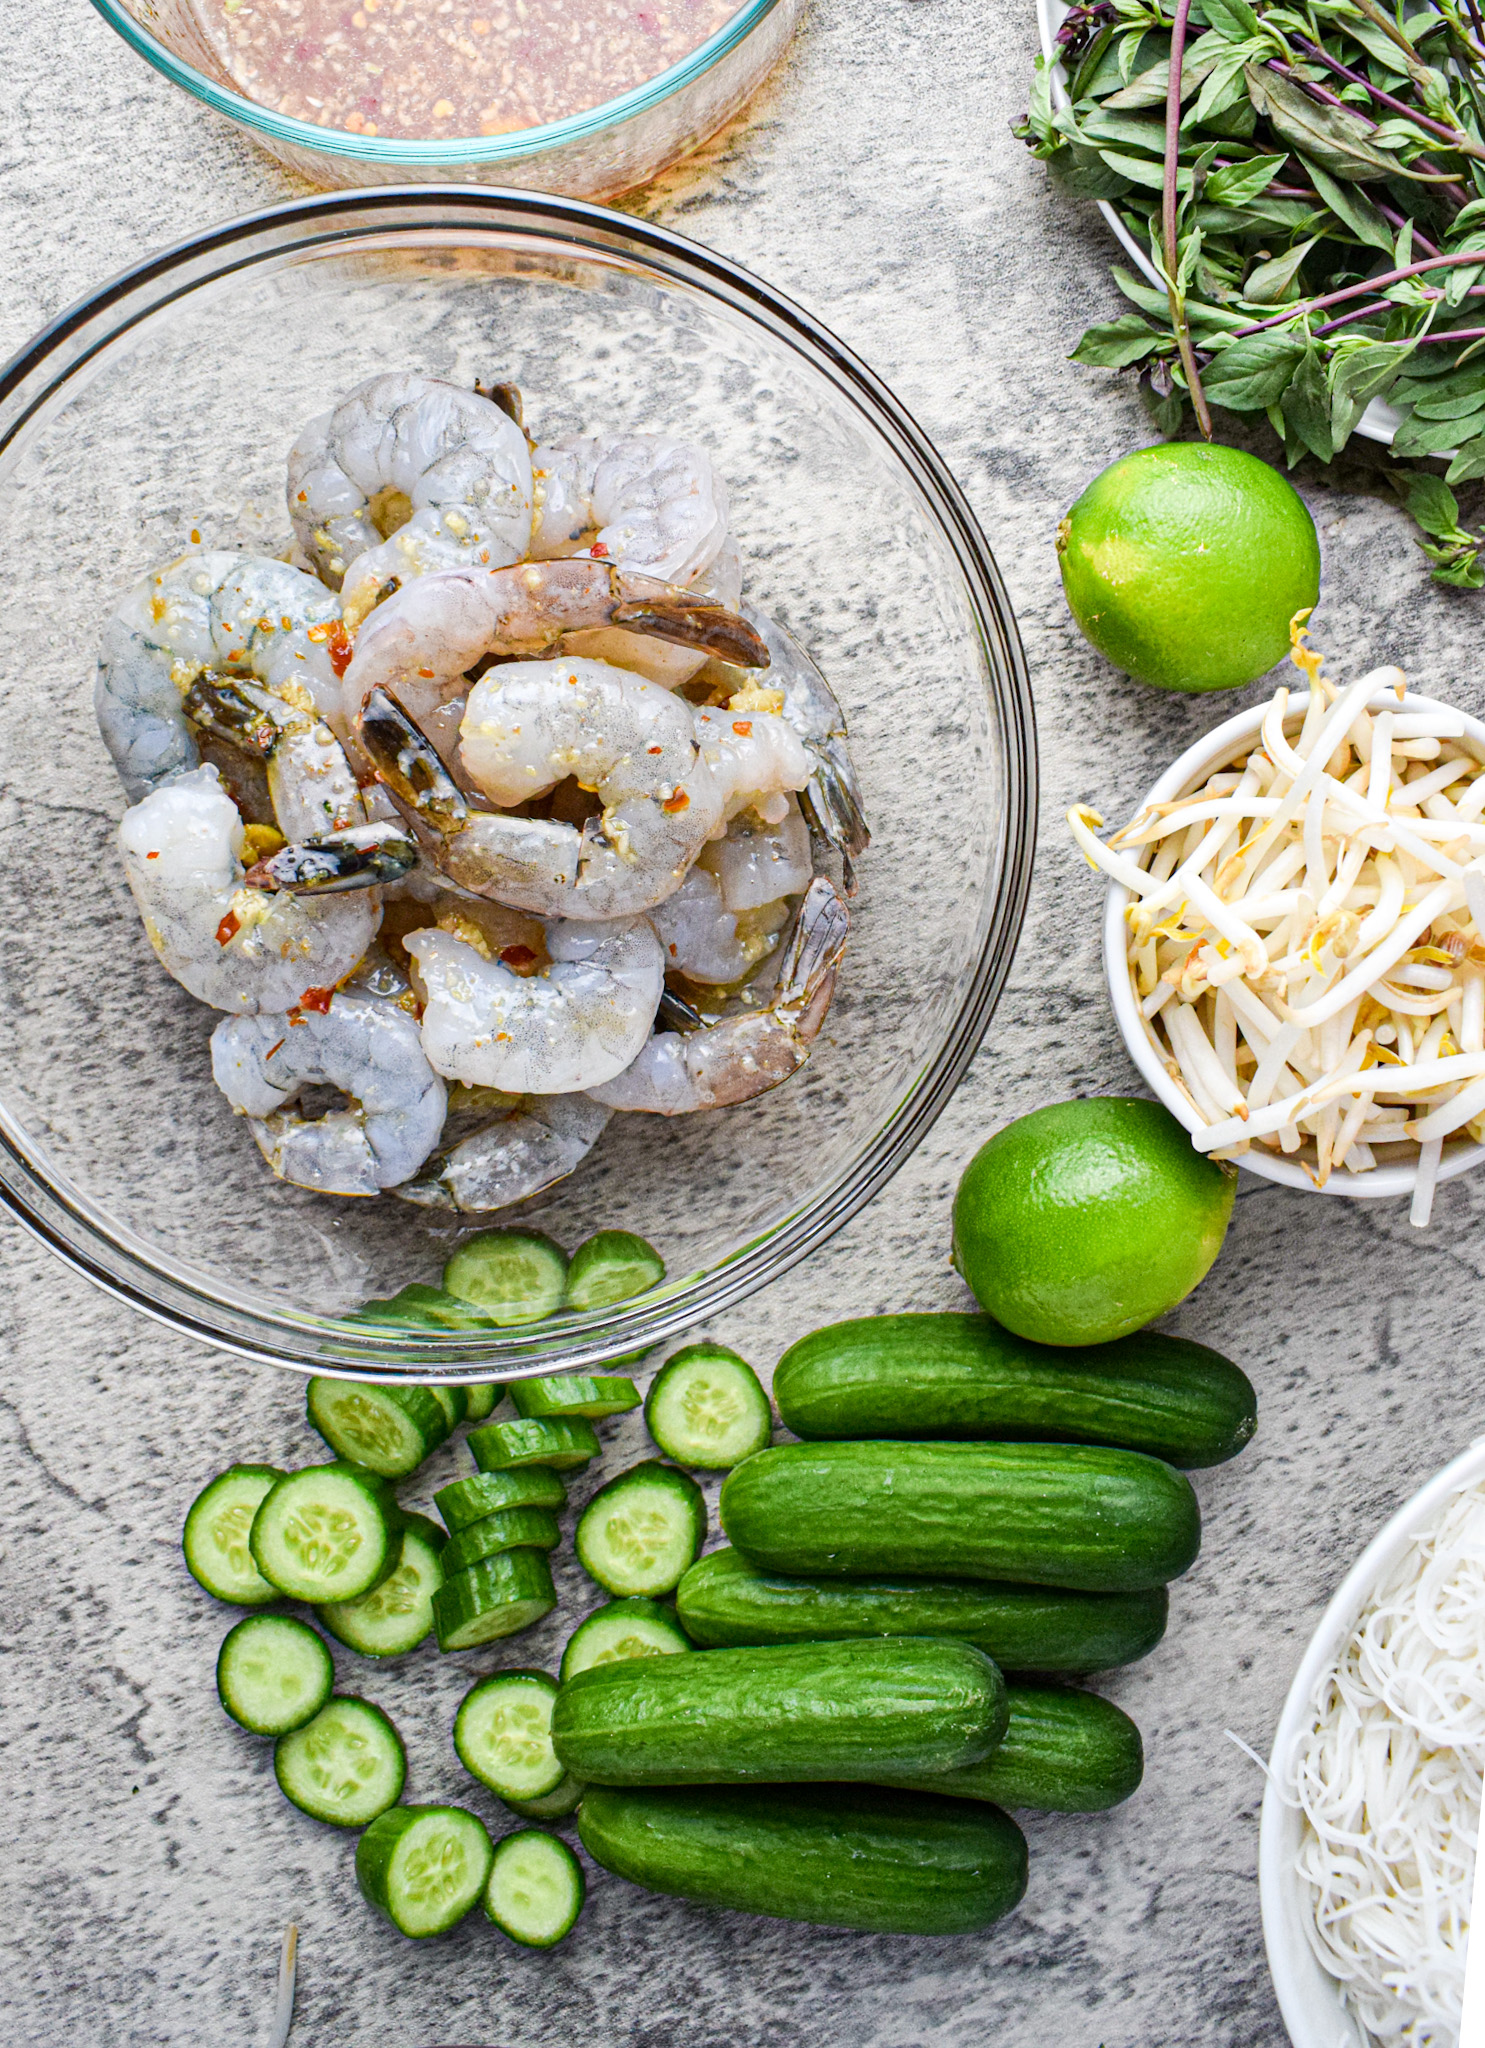 marinating shrimp for vietnames shrimp and noodle salad